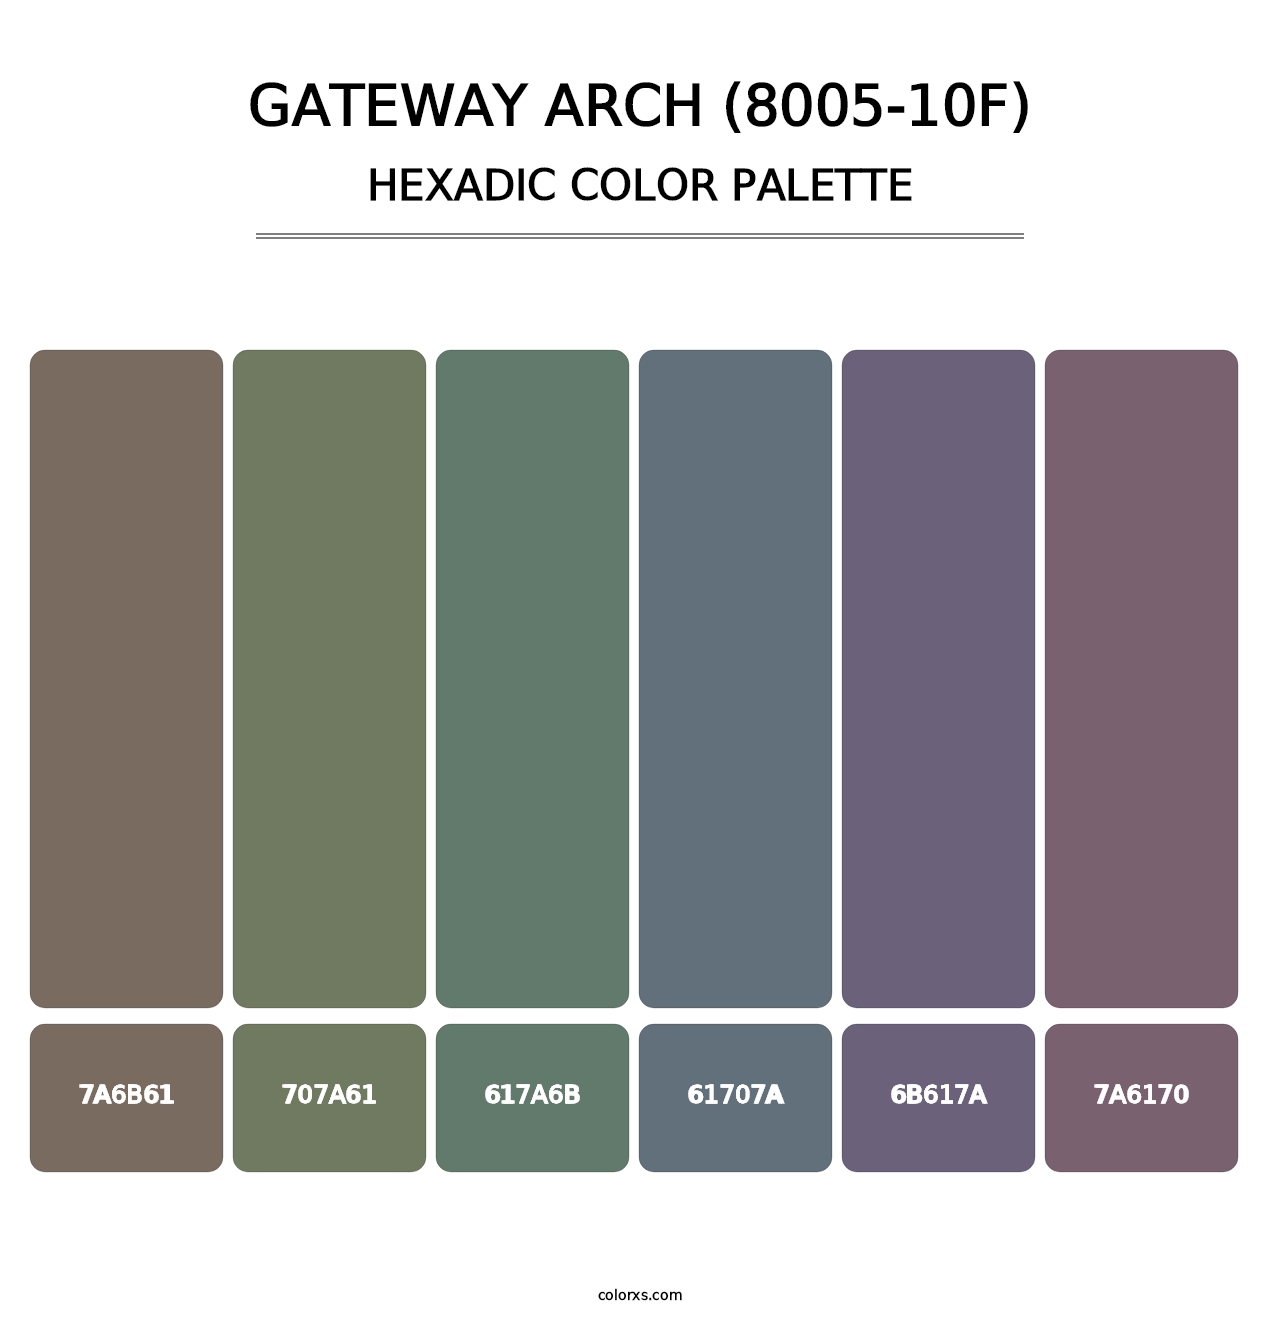 Gateway Arch (8005-10F) - Hexadic Color Palette